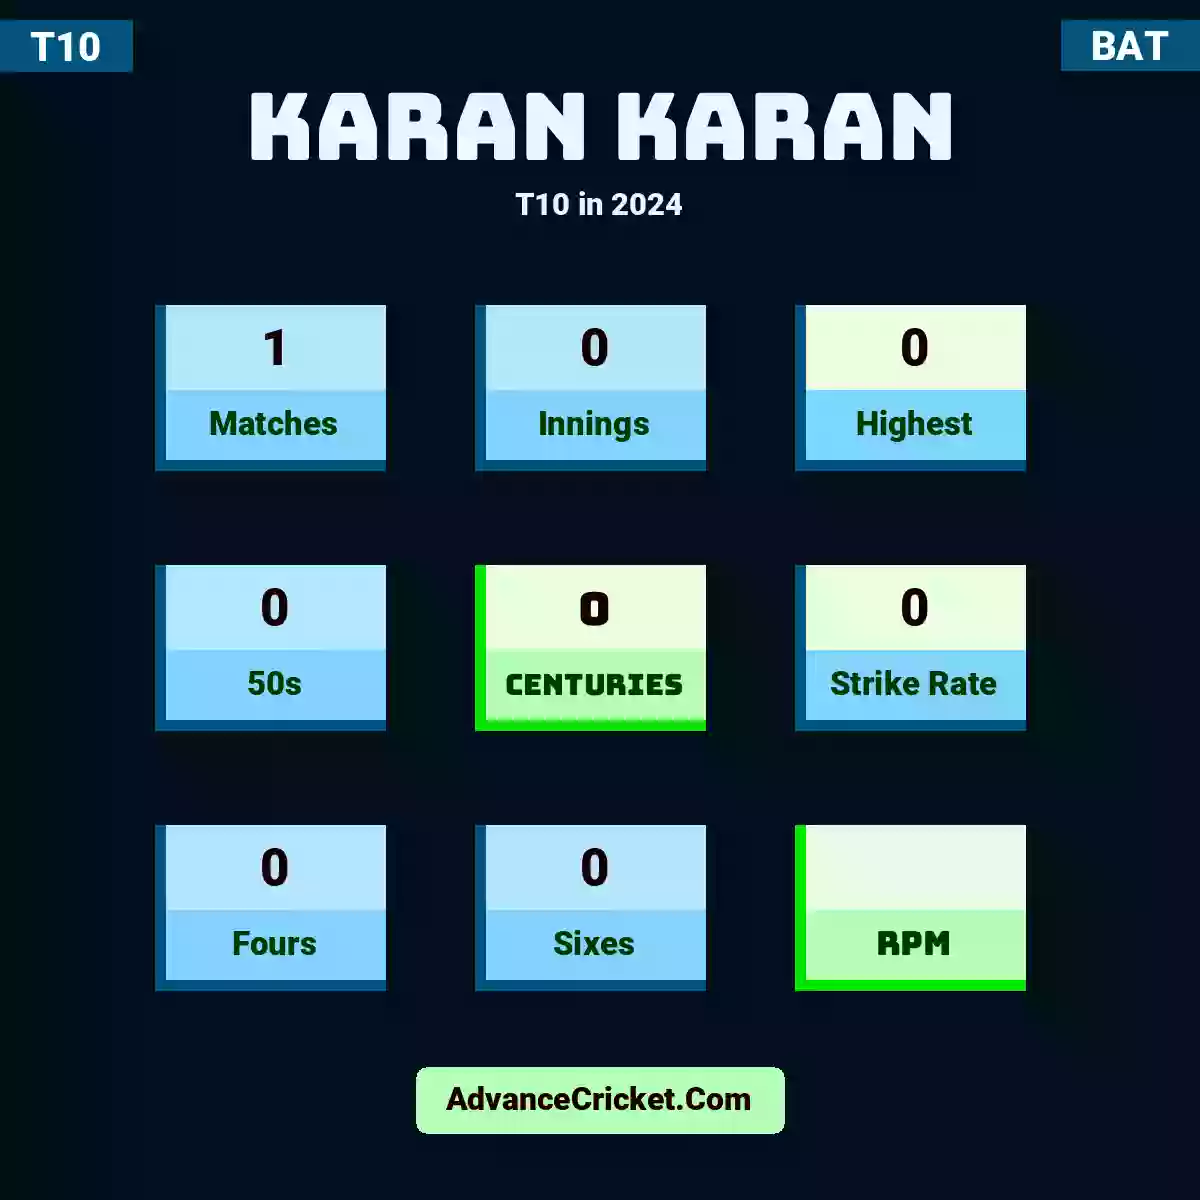 Karan Karan T10  in 2024, Karan Karan played 1 matches, scored 0 runs as highest, 0 half-centuries, and 0 centuries, with a strike rate of 0. K.Karan hit 0 fours and 0 sixes.